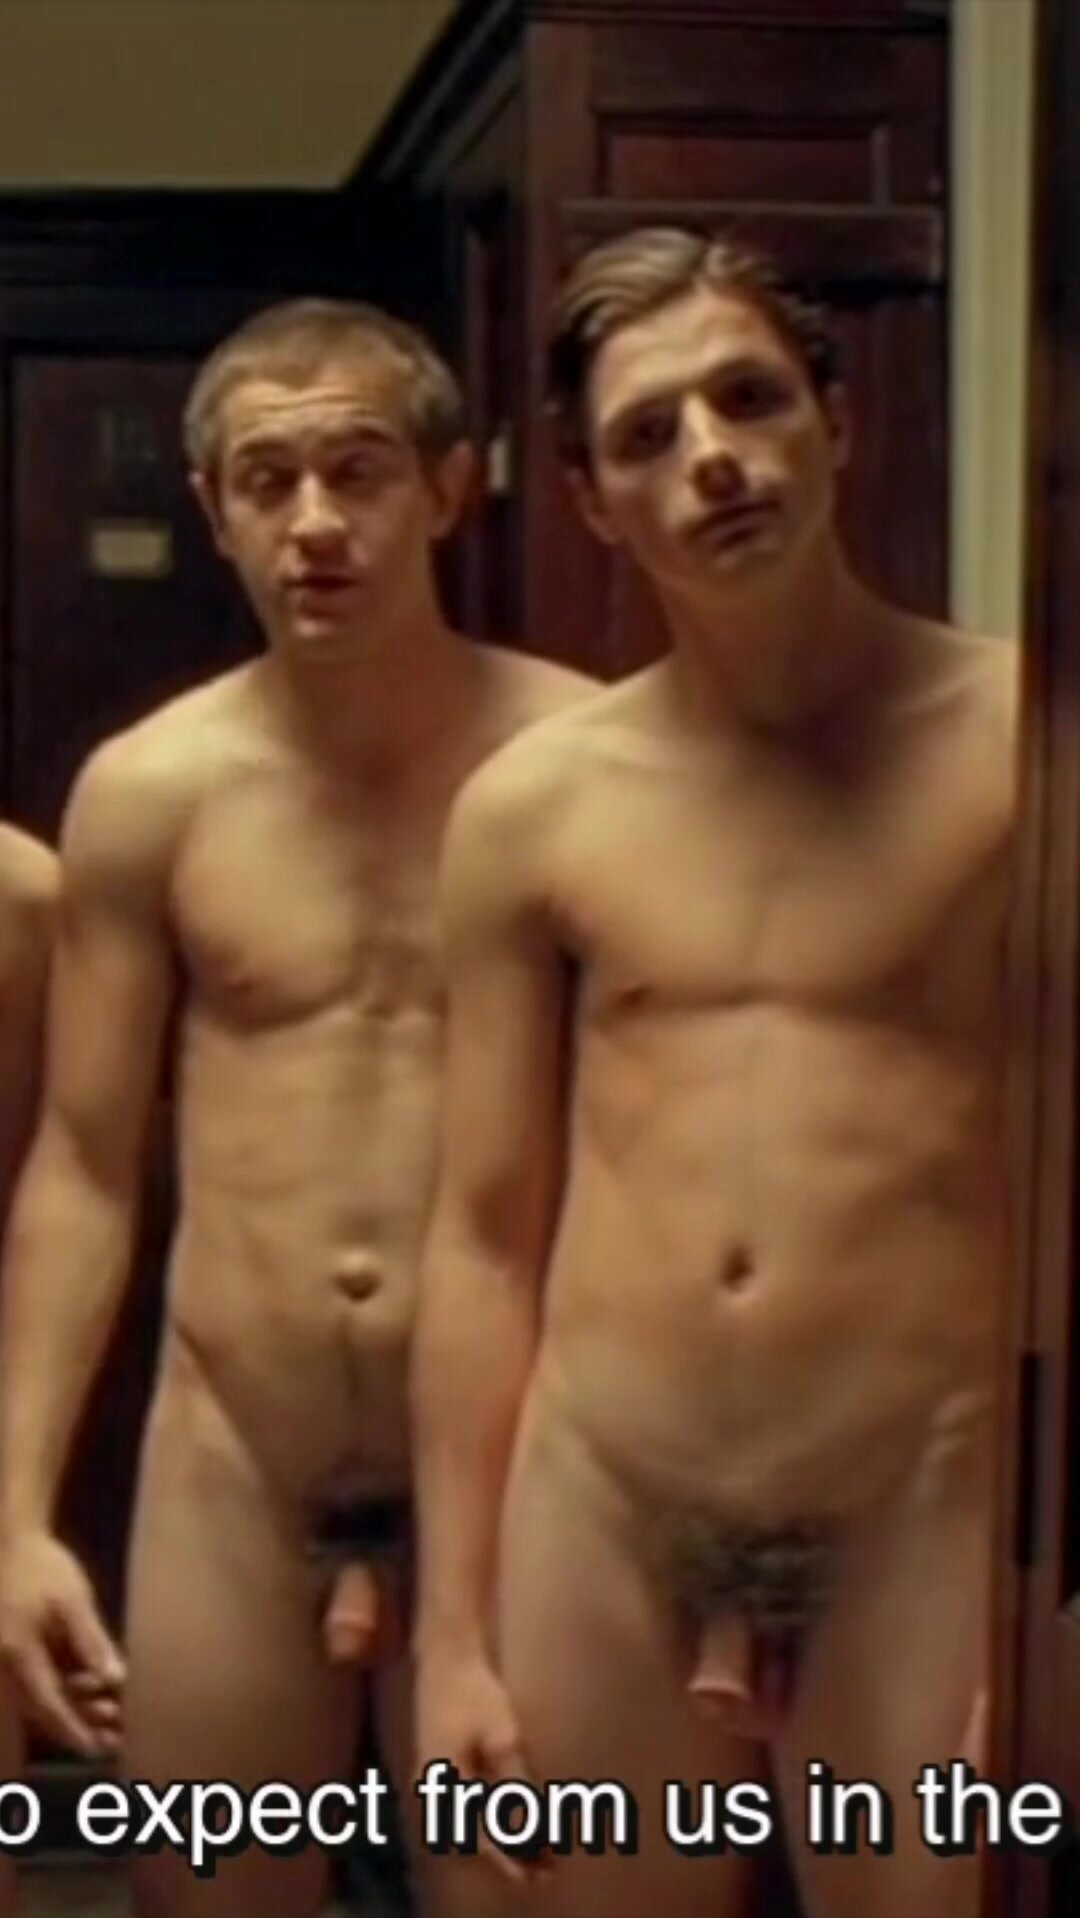 Straight nude boys in movie